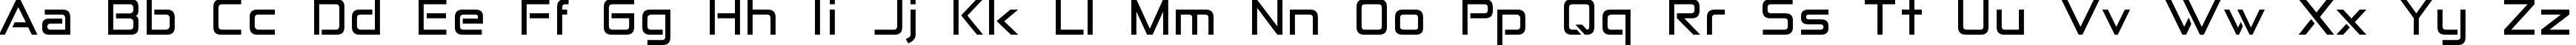 Пример написания английского алфавита шрифтом Anita semi-square